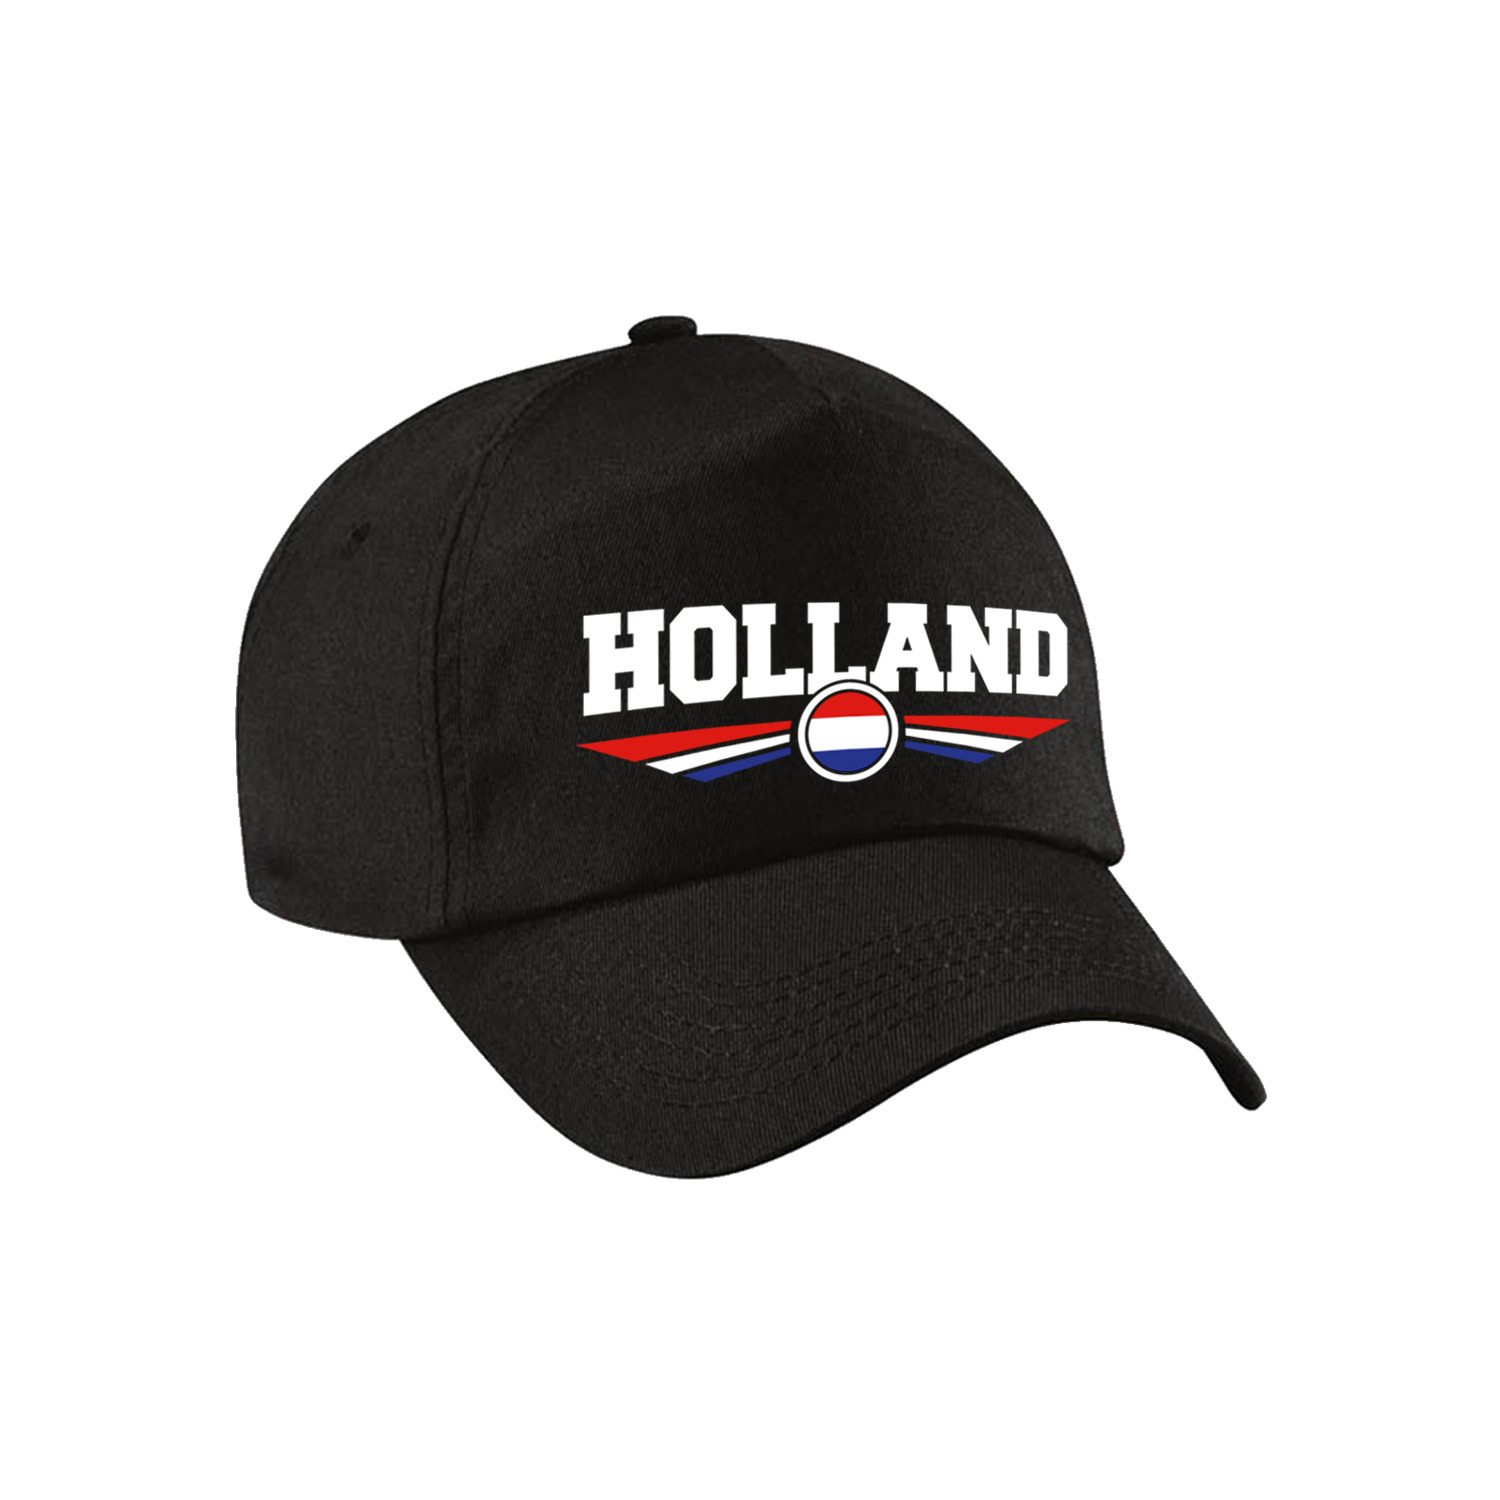 Nederland - Holland landen pet - baseball cap zwart kinderen